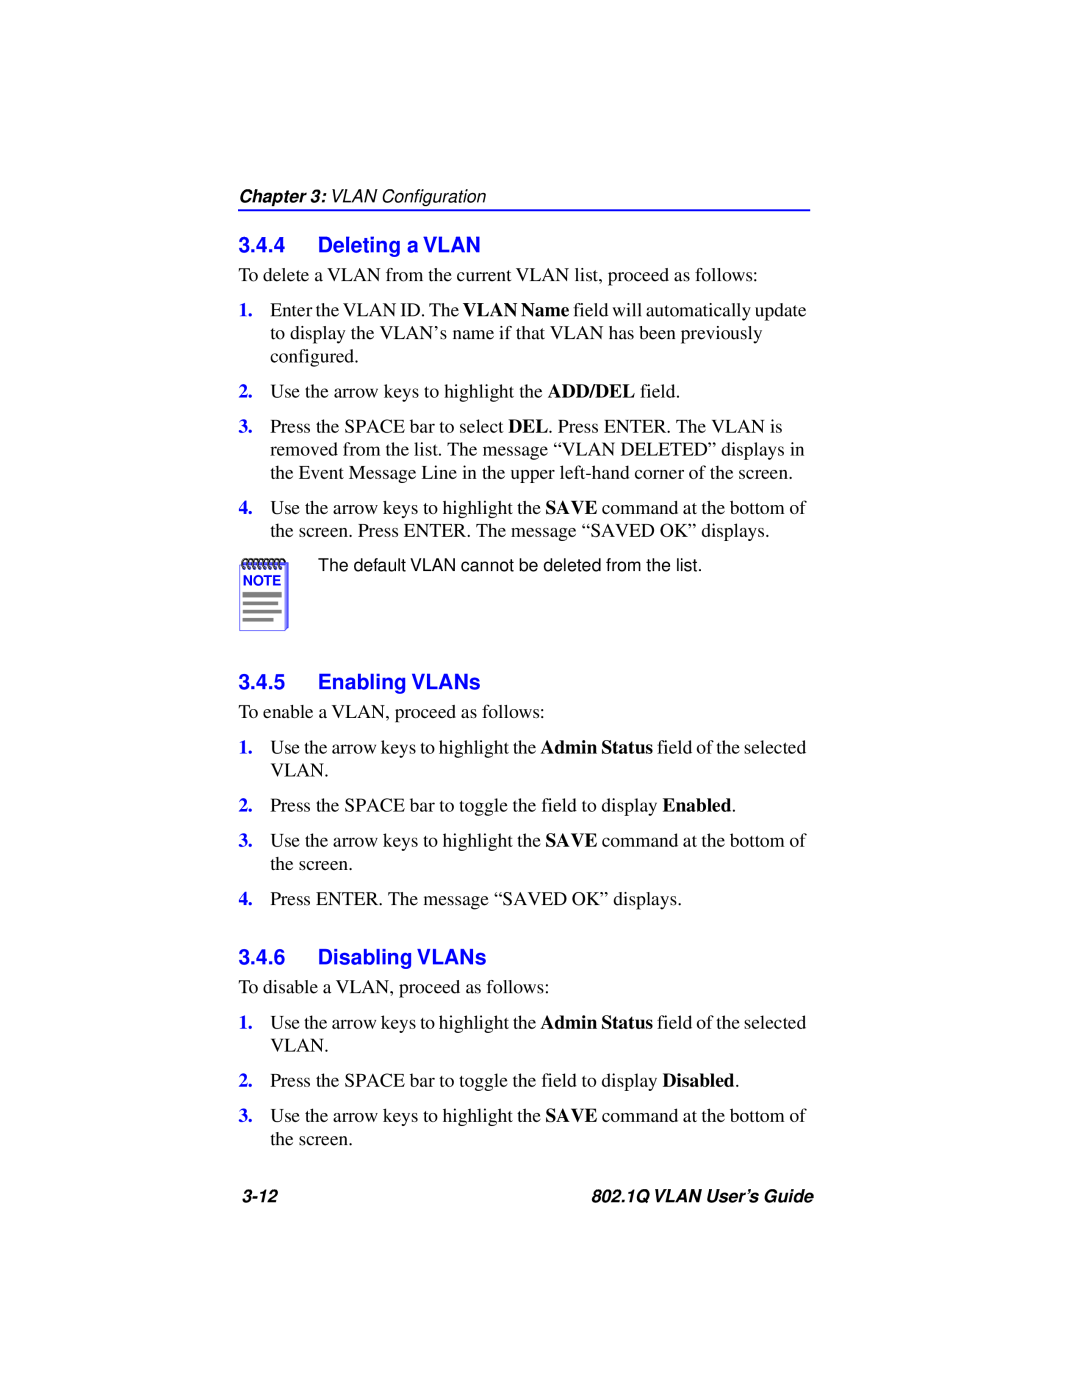 Cabletron Systems 802.1Q manual Deleting a VLAN, Enabling VLANs, Disabling VLANs 